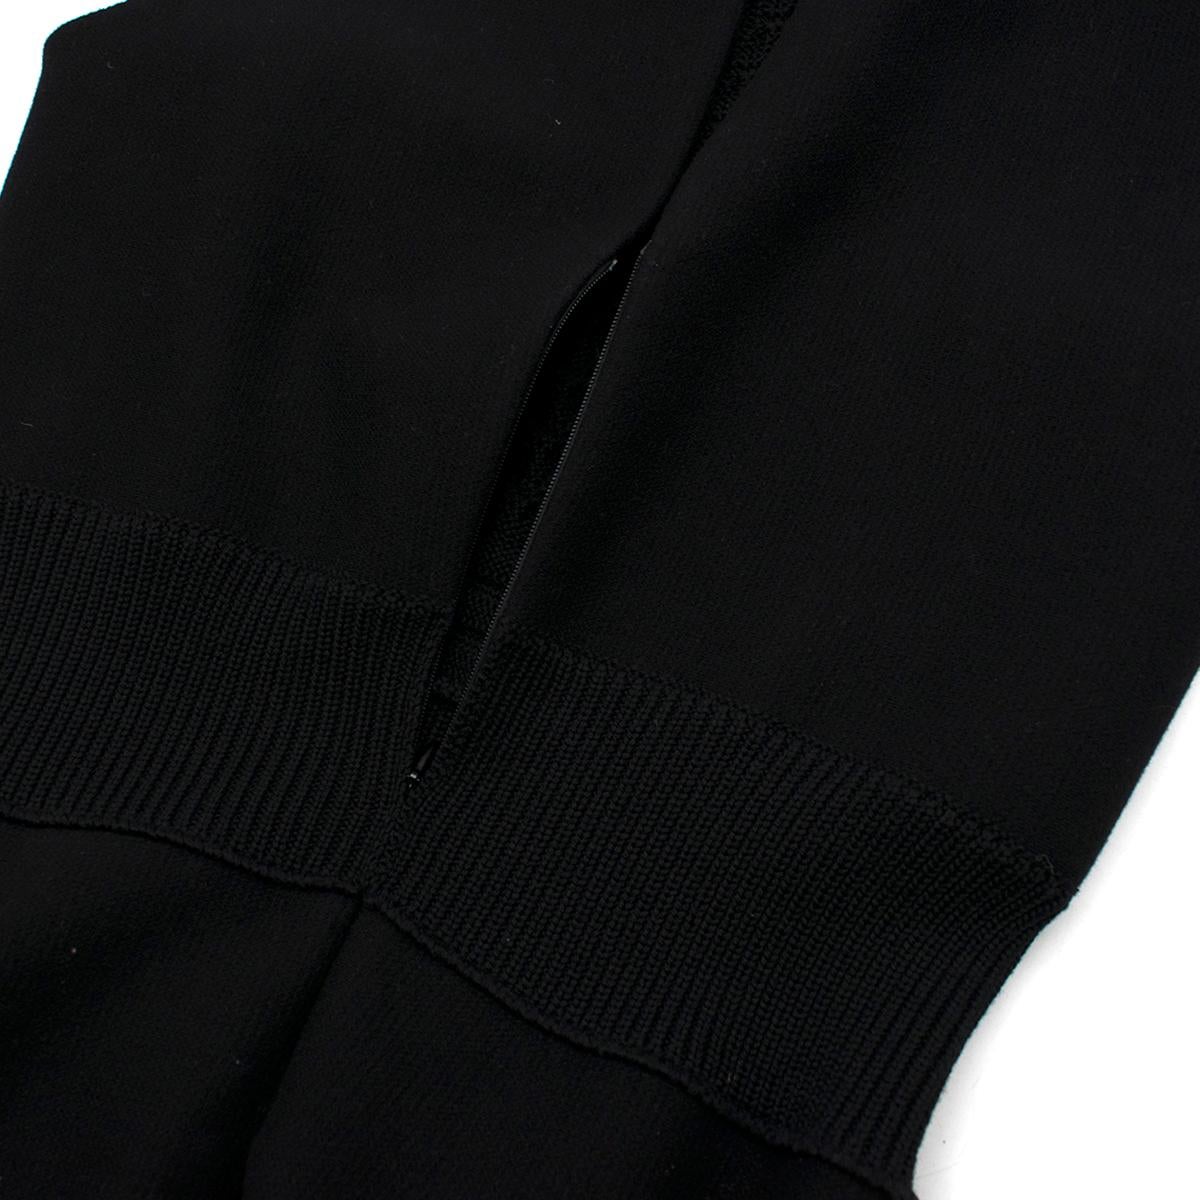 Prada Black Wool-blend Knit Dress - Size US 8 5